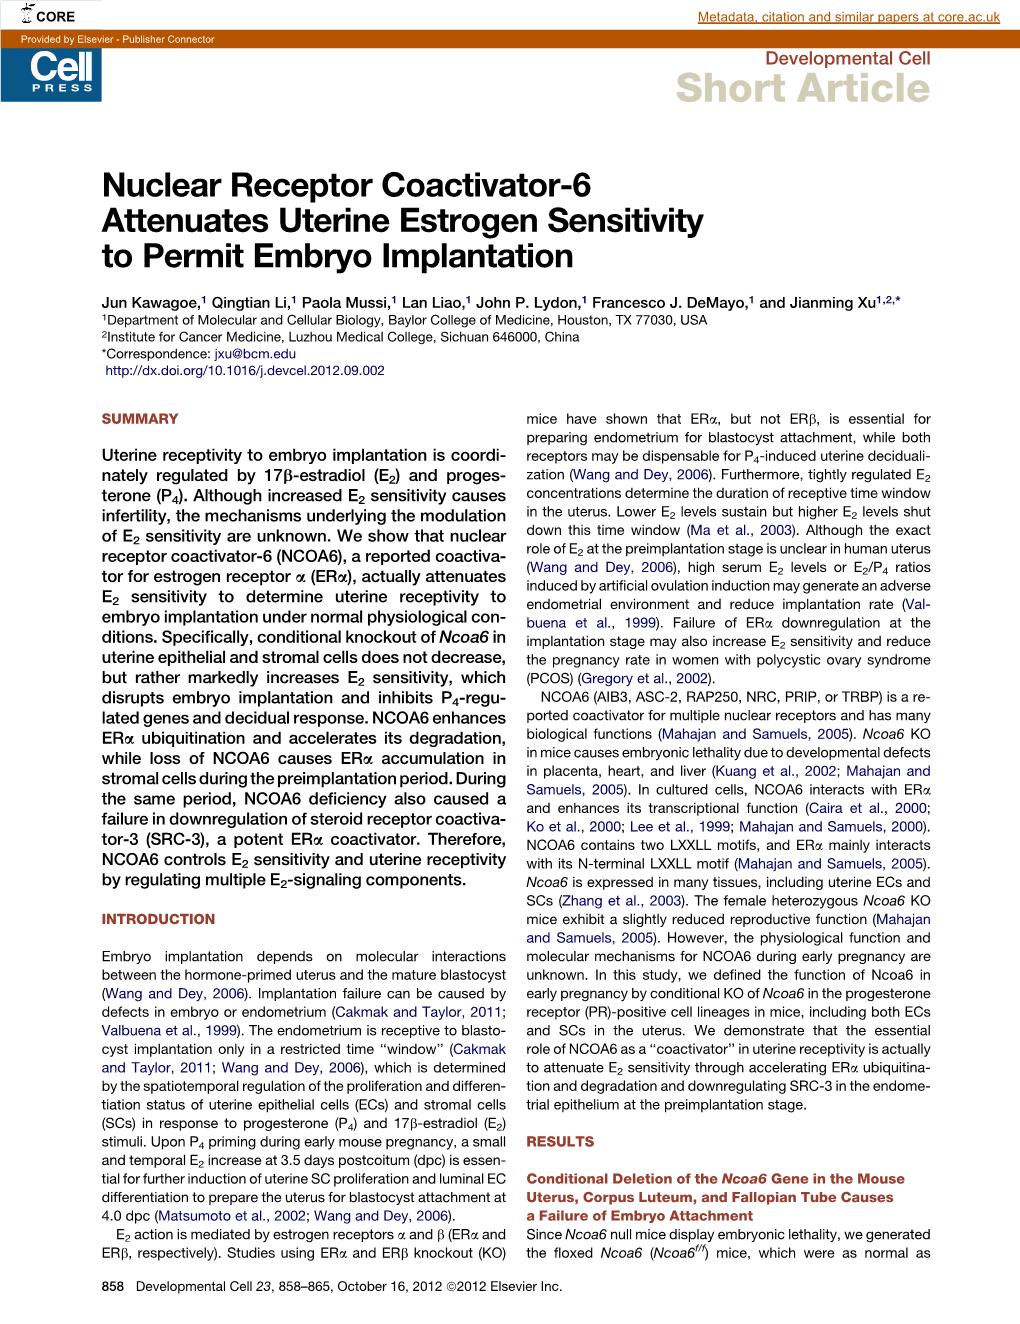 Nuclear Receptor Coactivator-6 Attenuates Uterine Estrogen Sensitivity to Permit Embryo Implantation